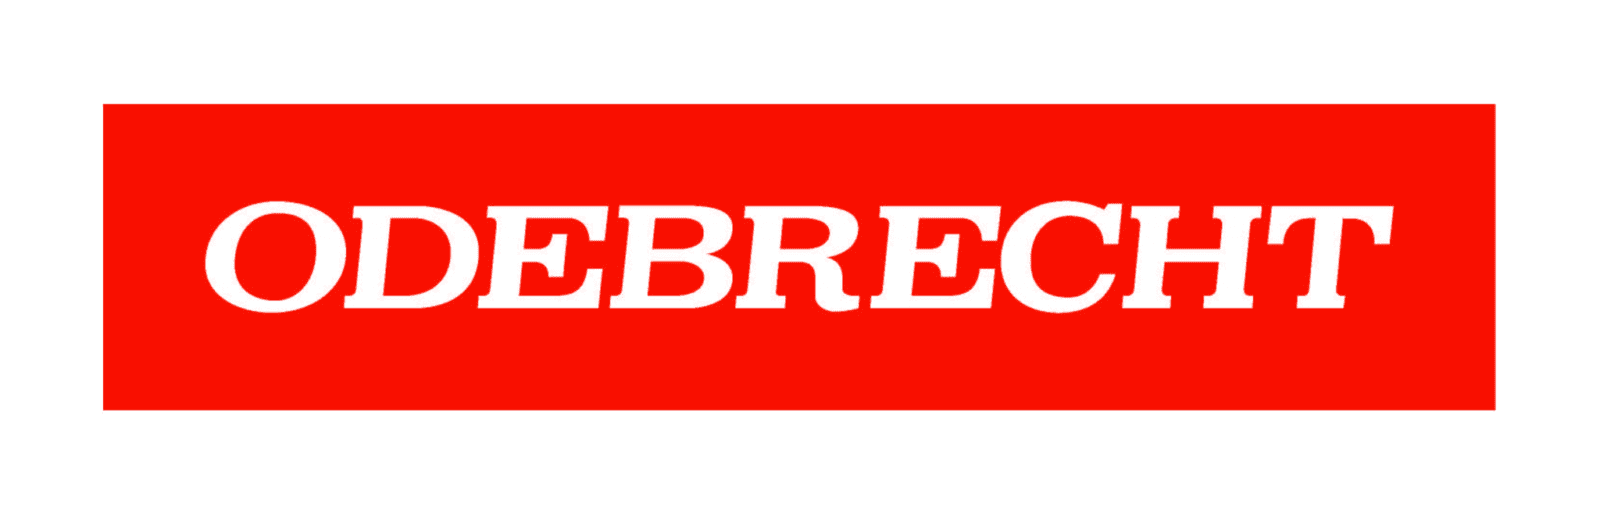 odebrech_logo2